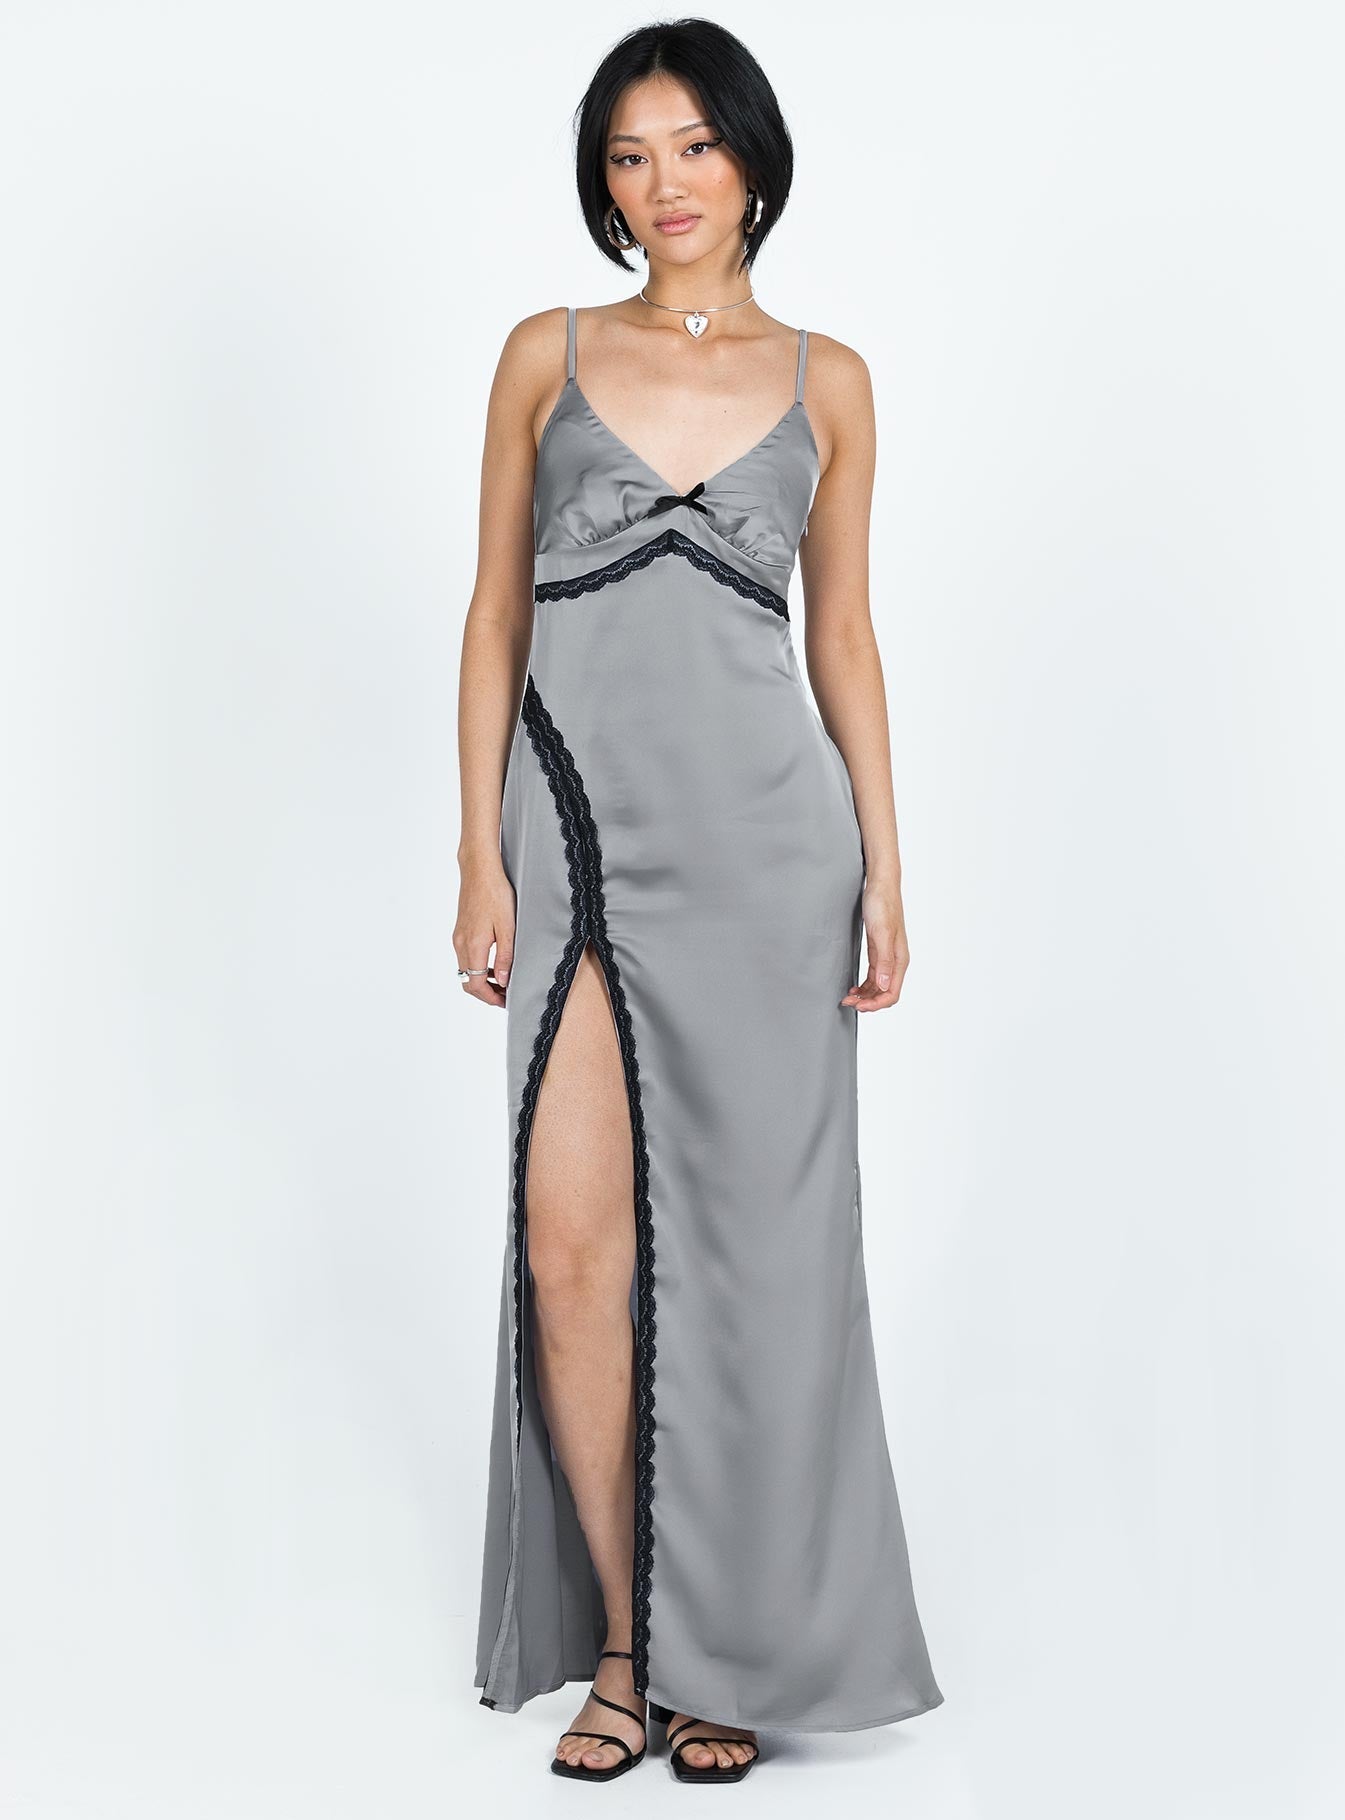 Shop Formal Dress - Sidney Lace Trim Maxi Dress Grey fifth image